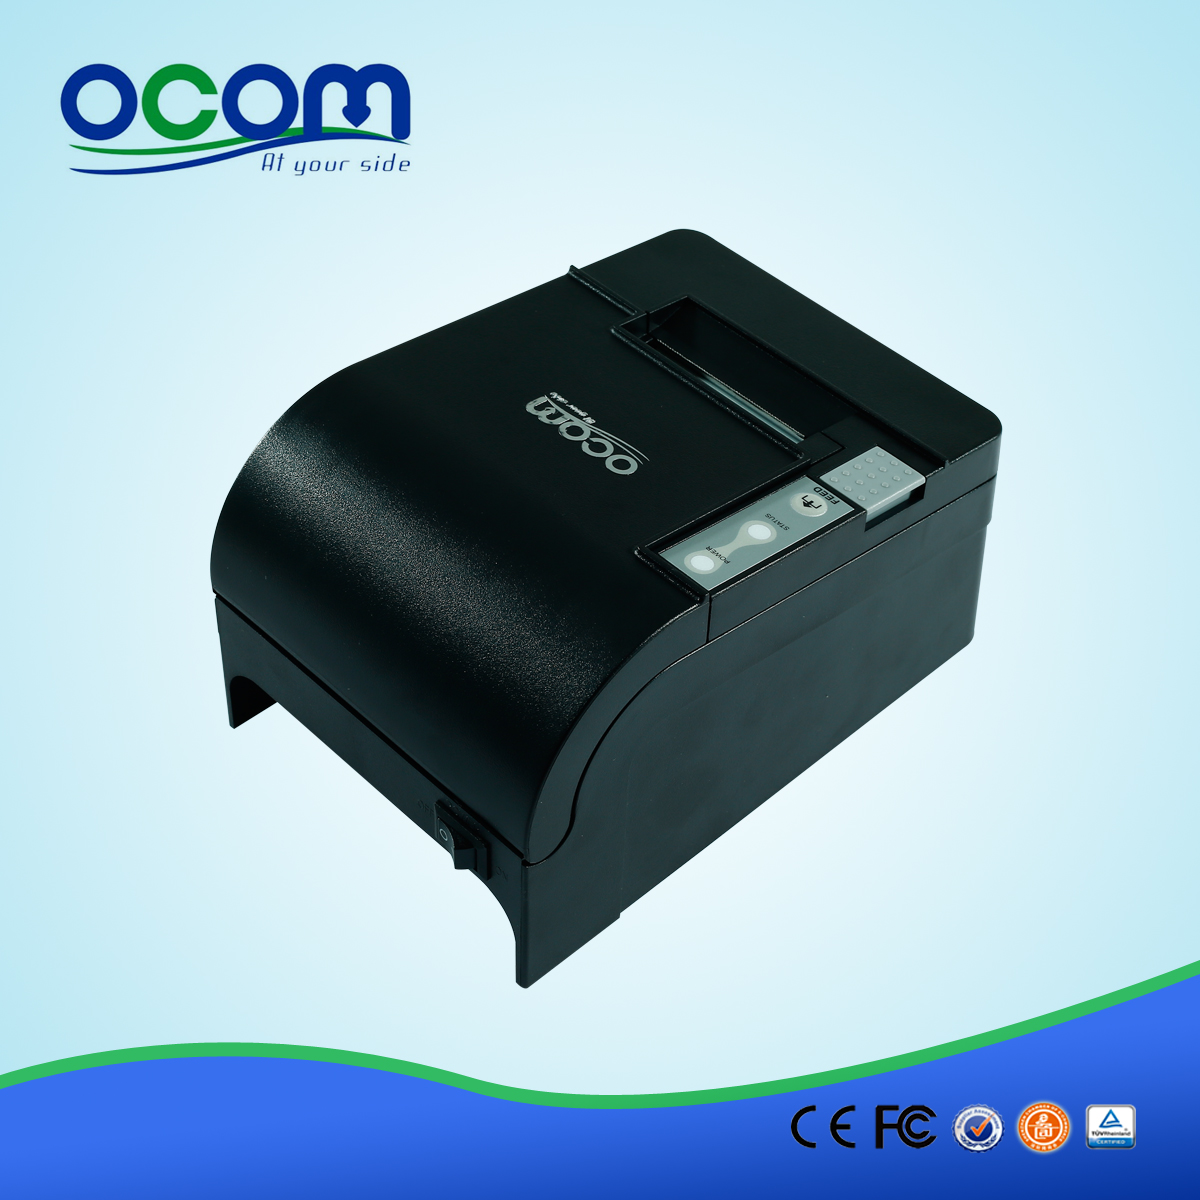 OCPP-58C 58mm Goedkope Receipt thermische printer